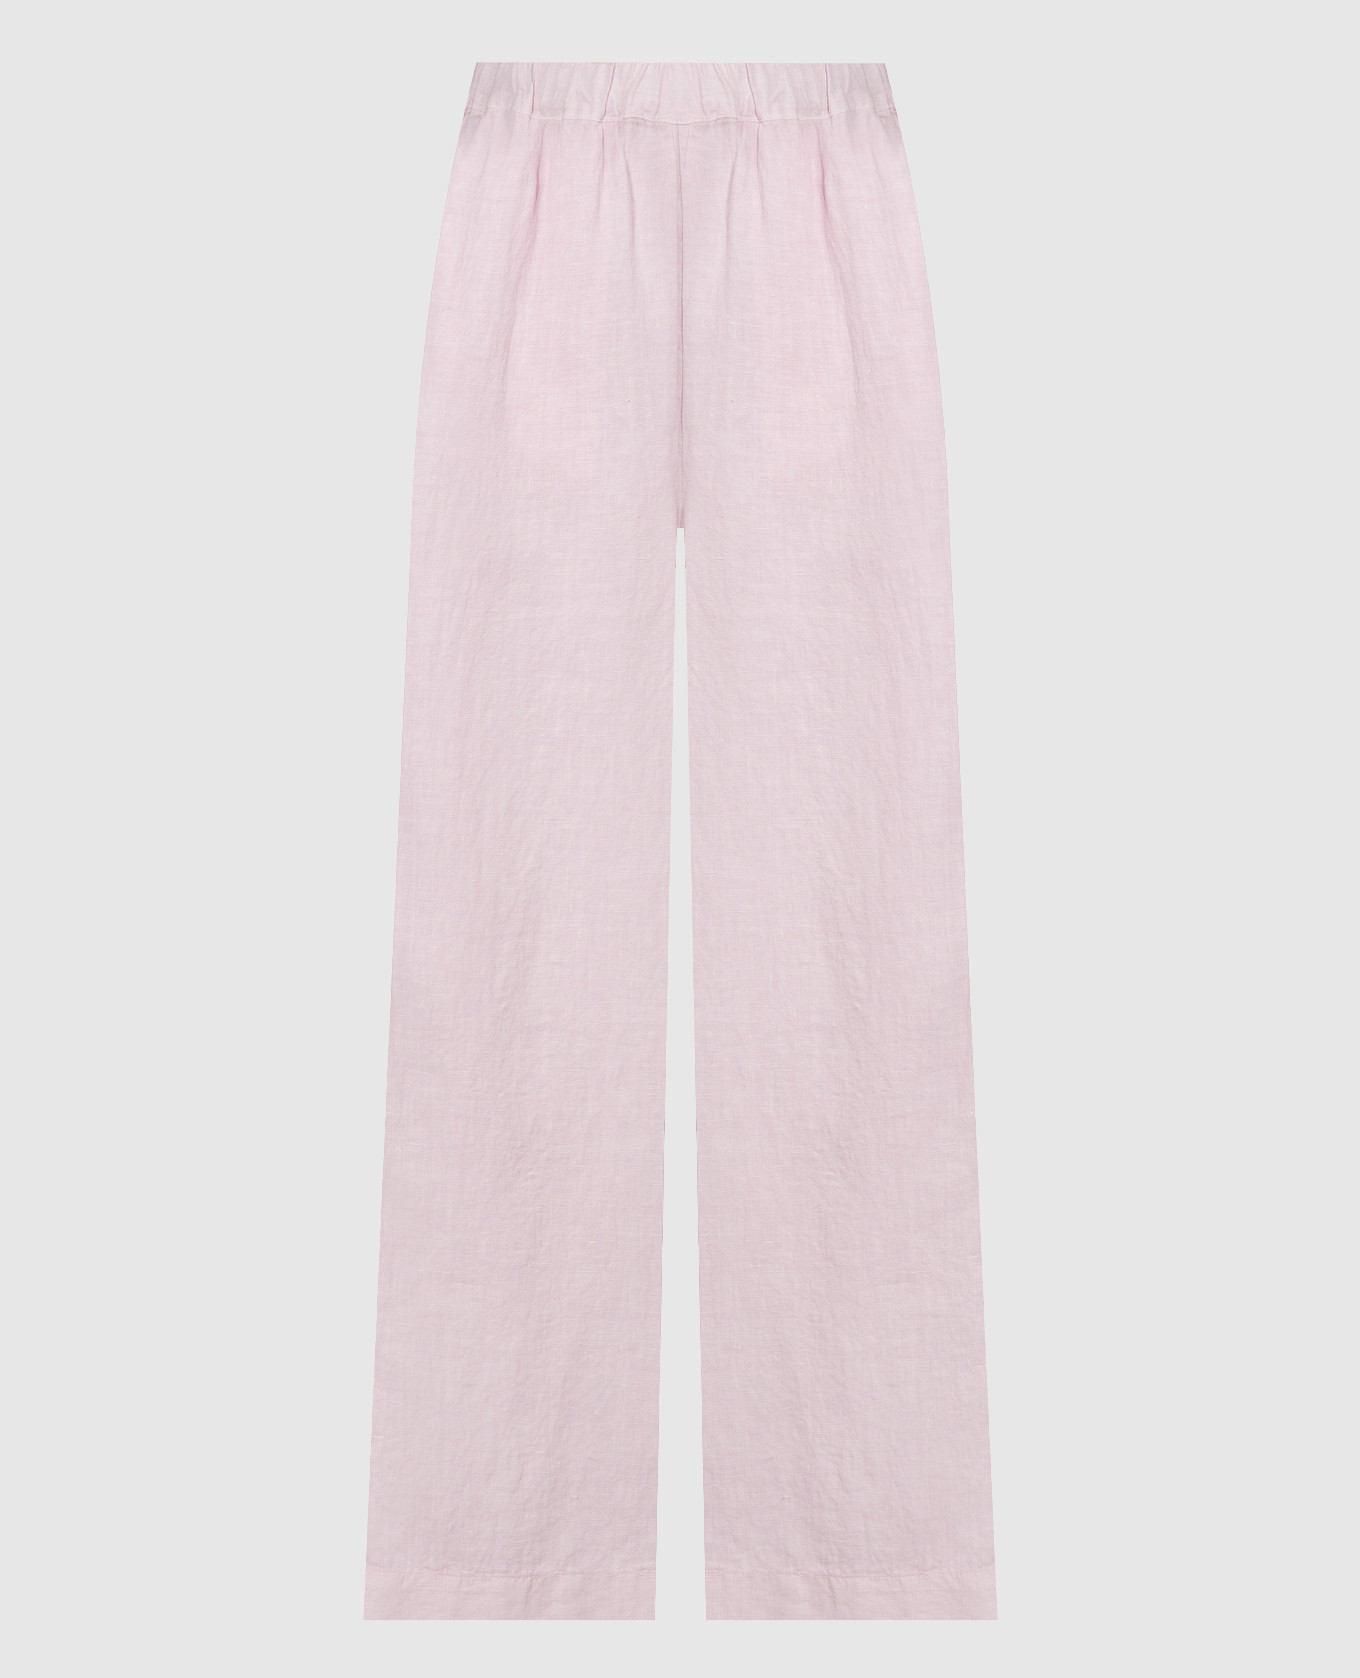 Pink linen pants